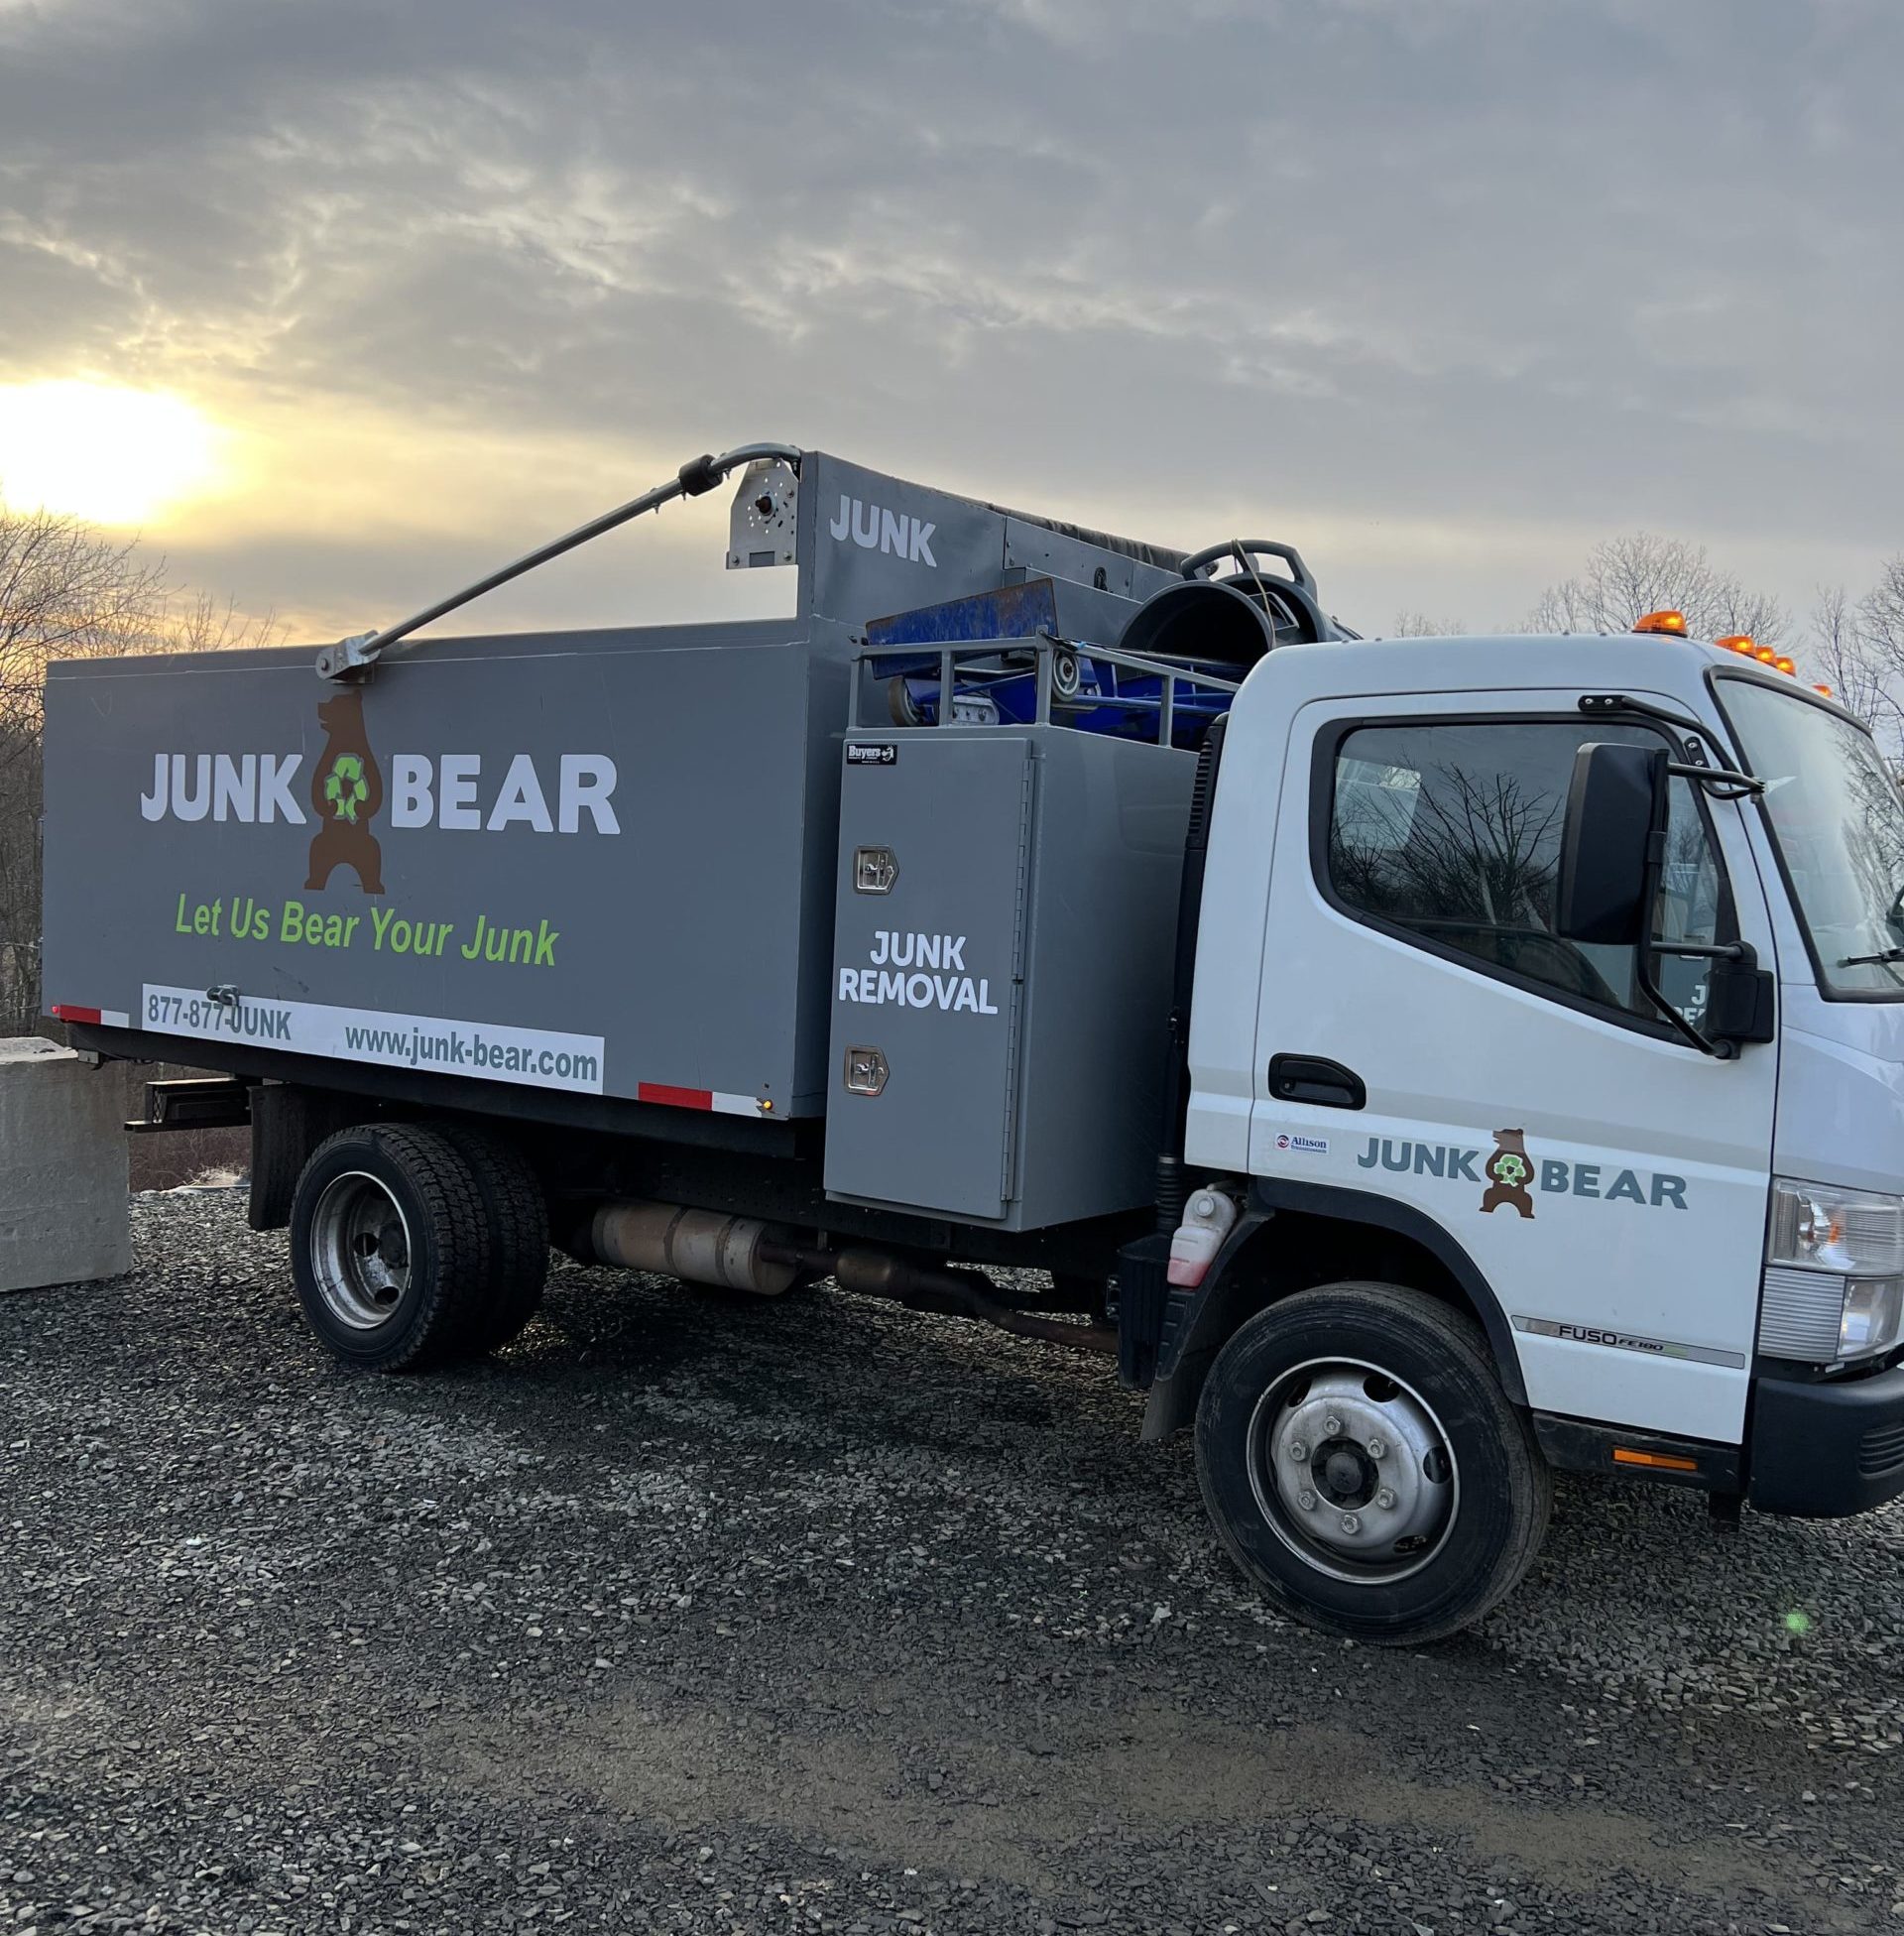 A Bear Junk junk removal truck ready to haul junk